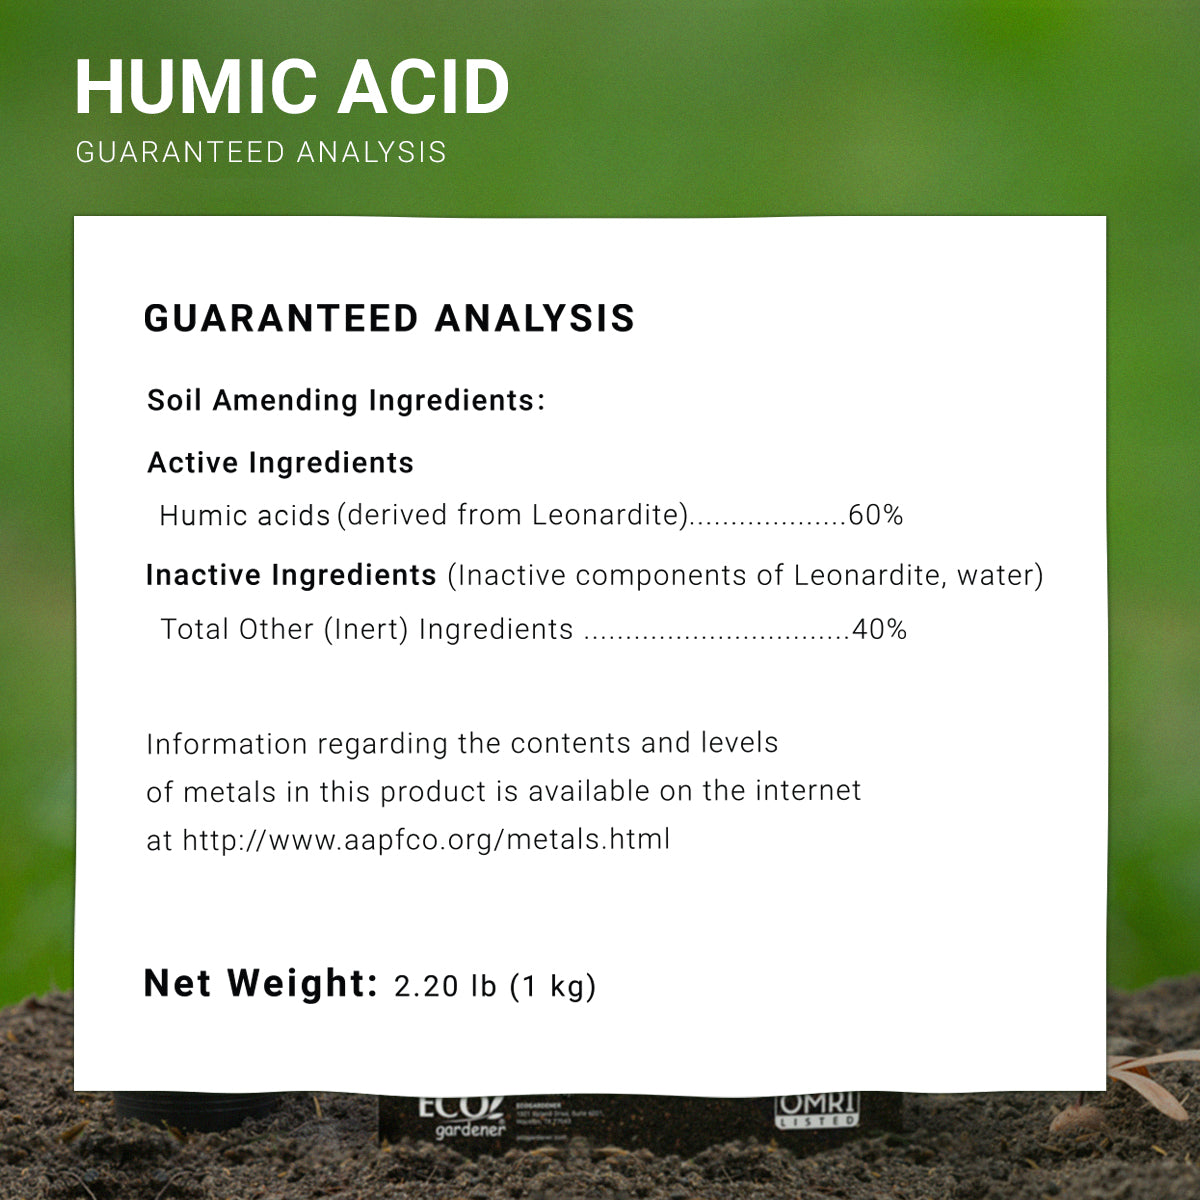 Humic Acid Information